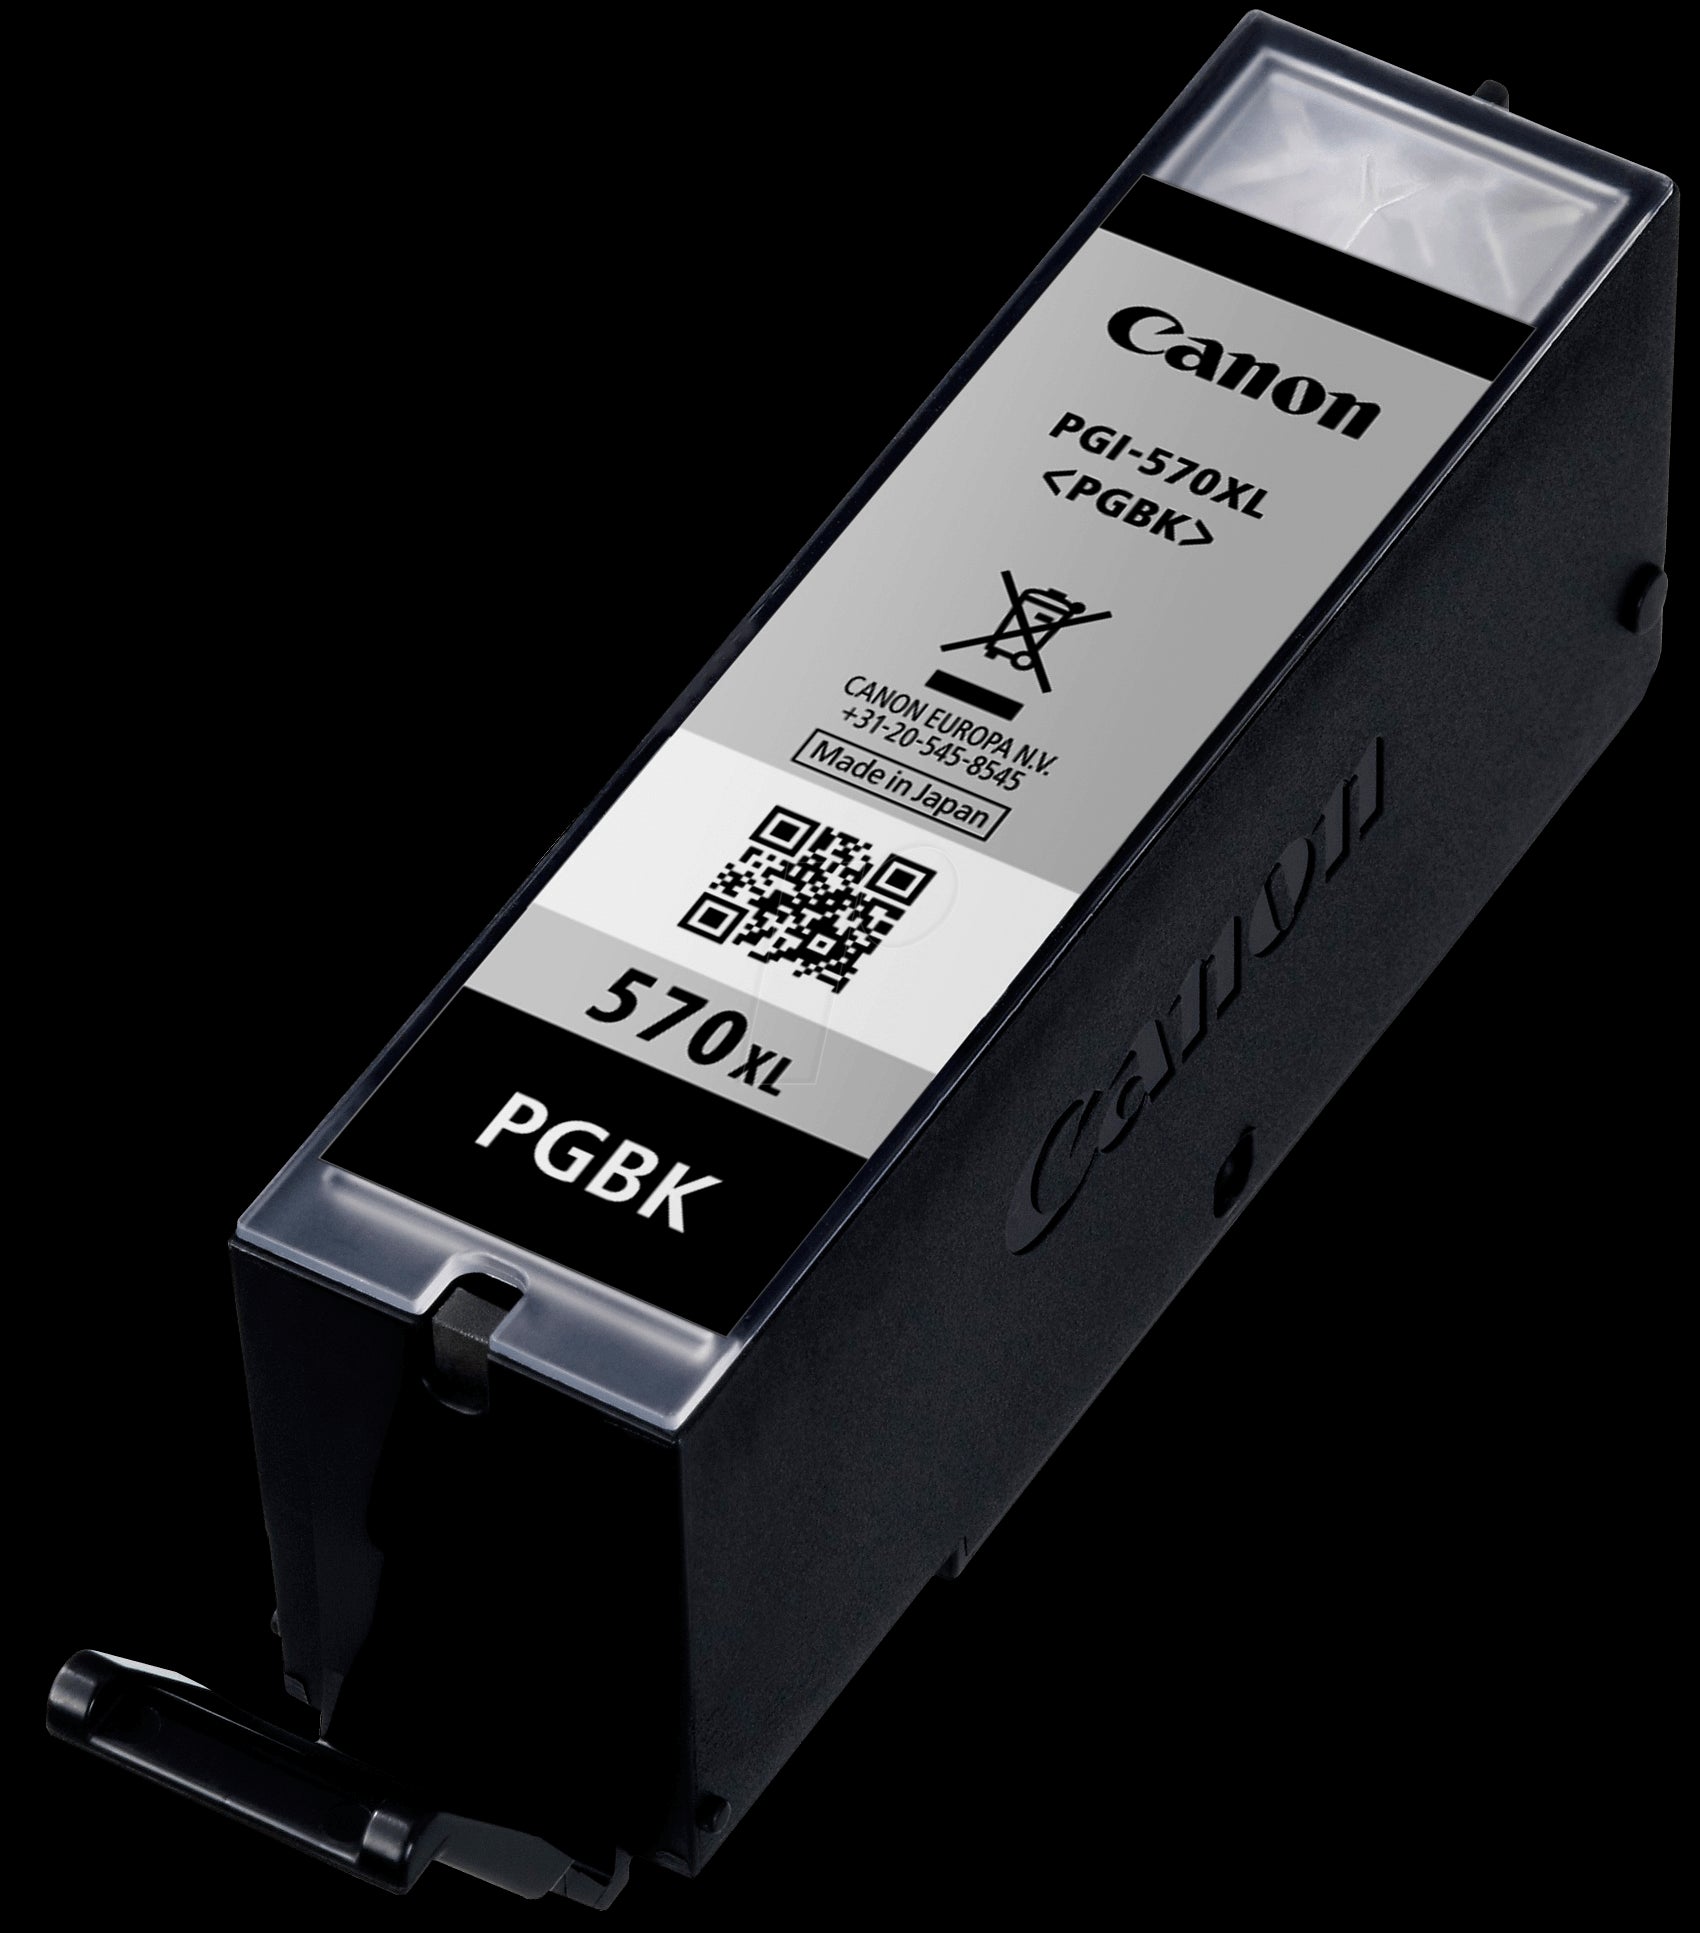 Canon Ink PGI-570XL Black Ink Cartridge